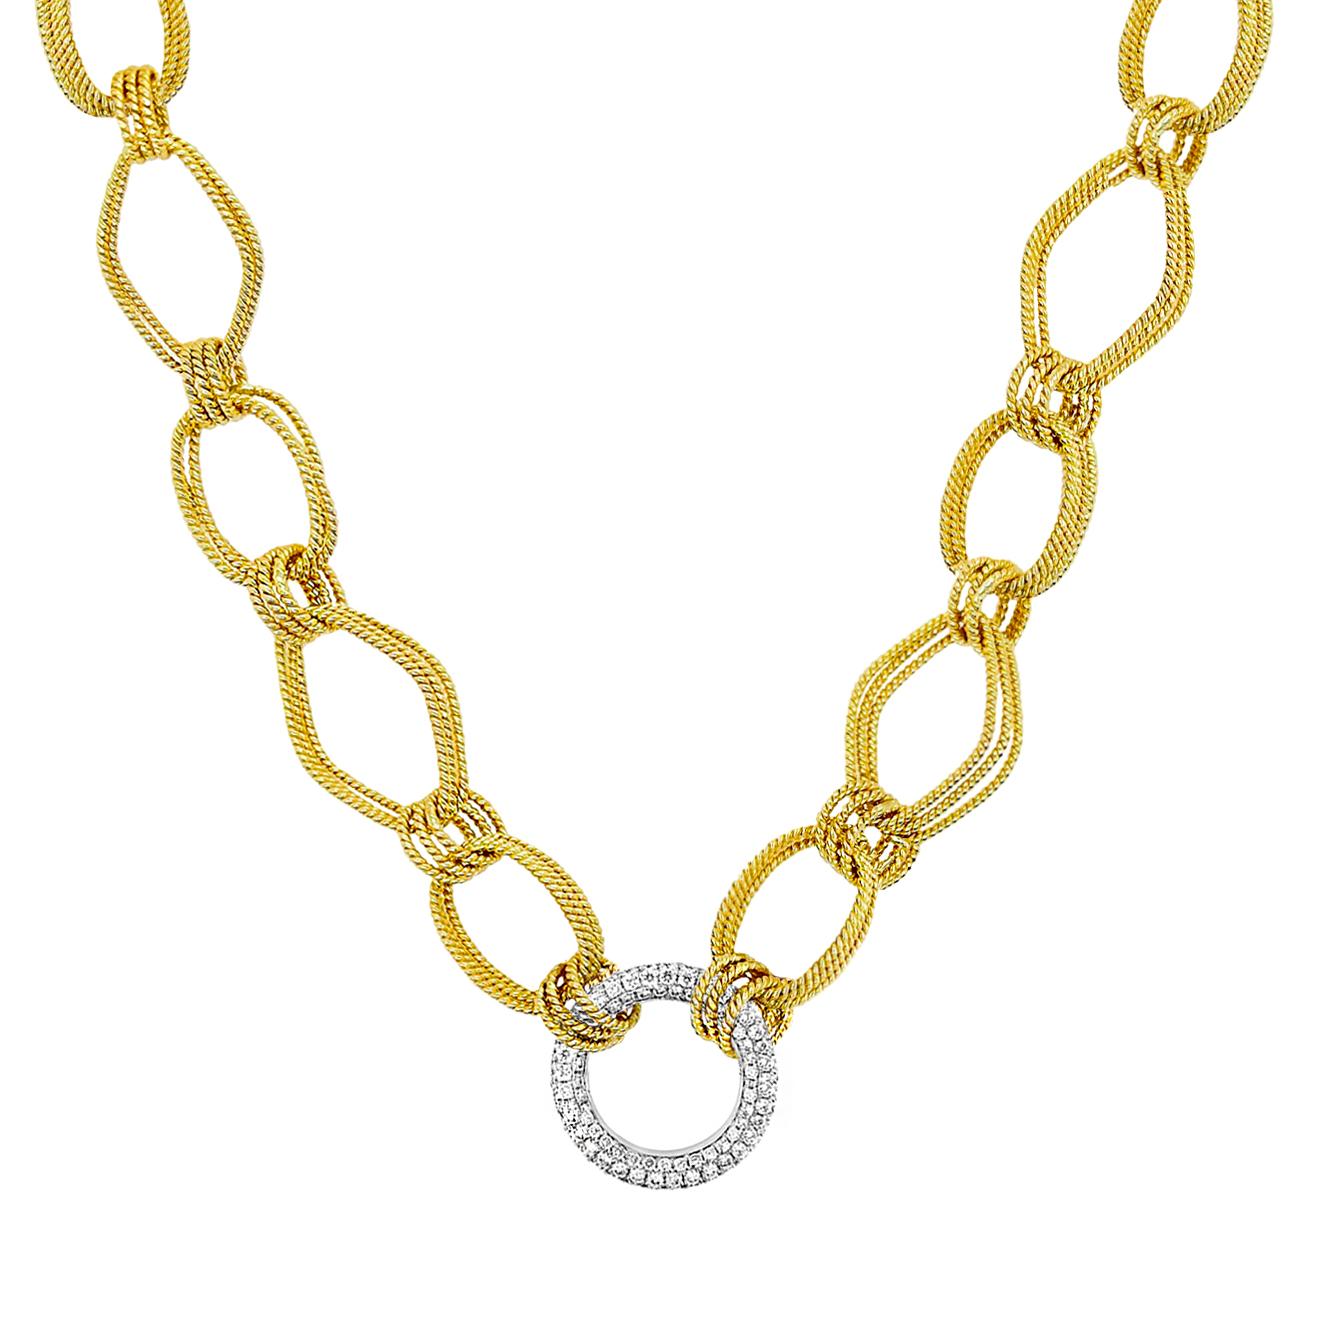 Vitolo 18 Karat Handmade Link Necklace with Double Sided Diamond Set Circle